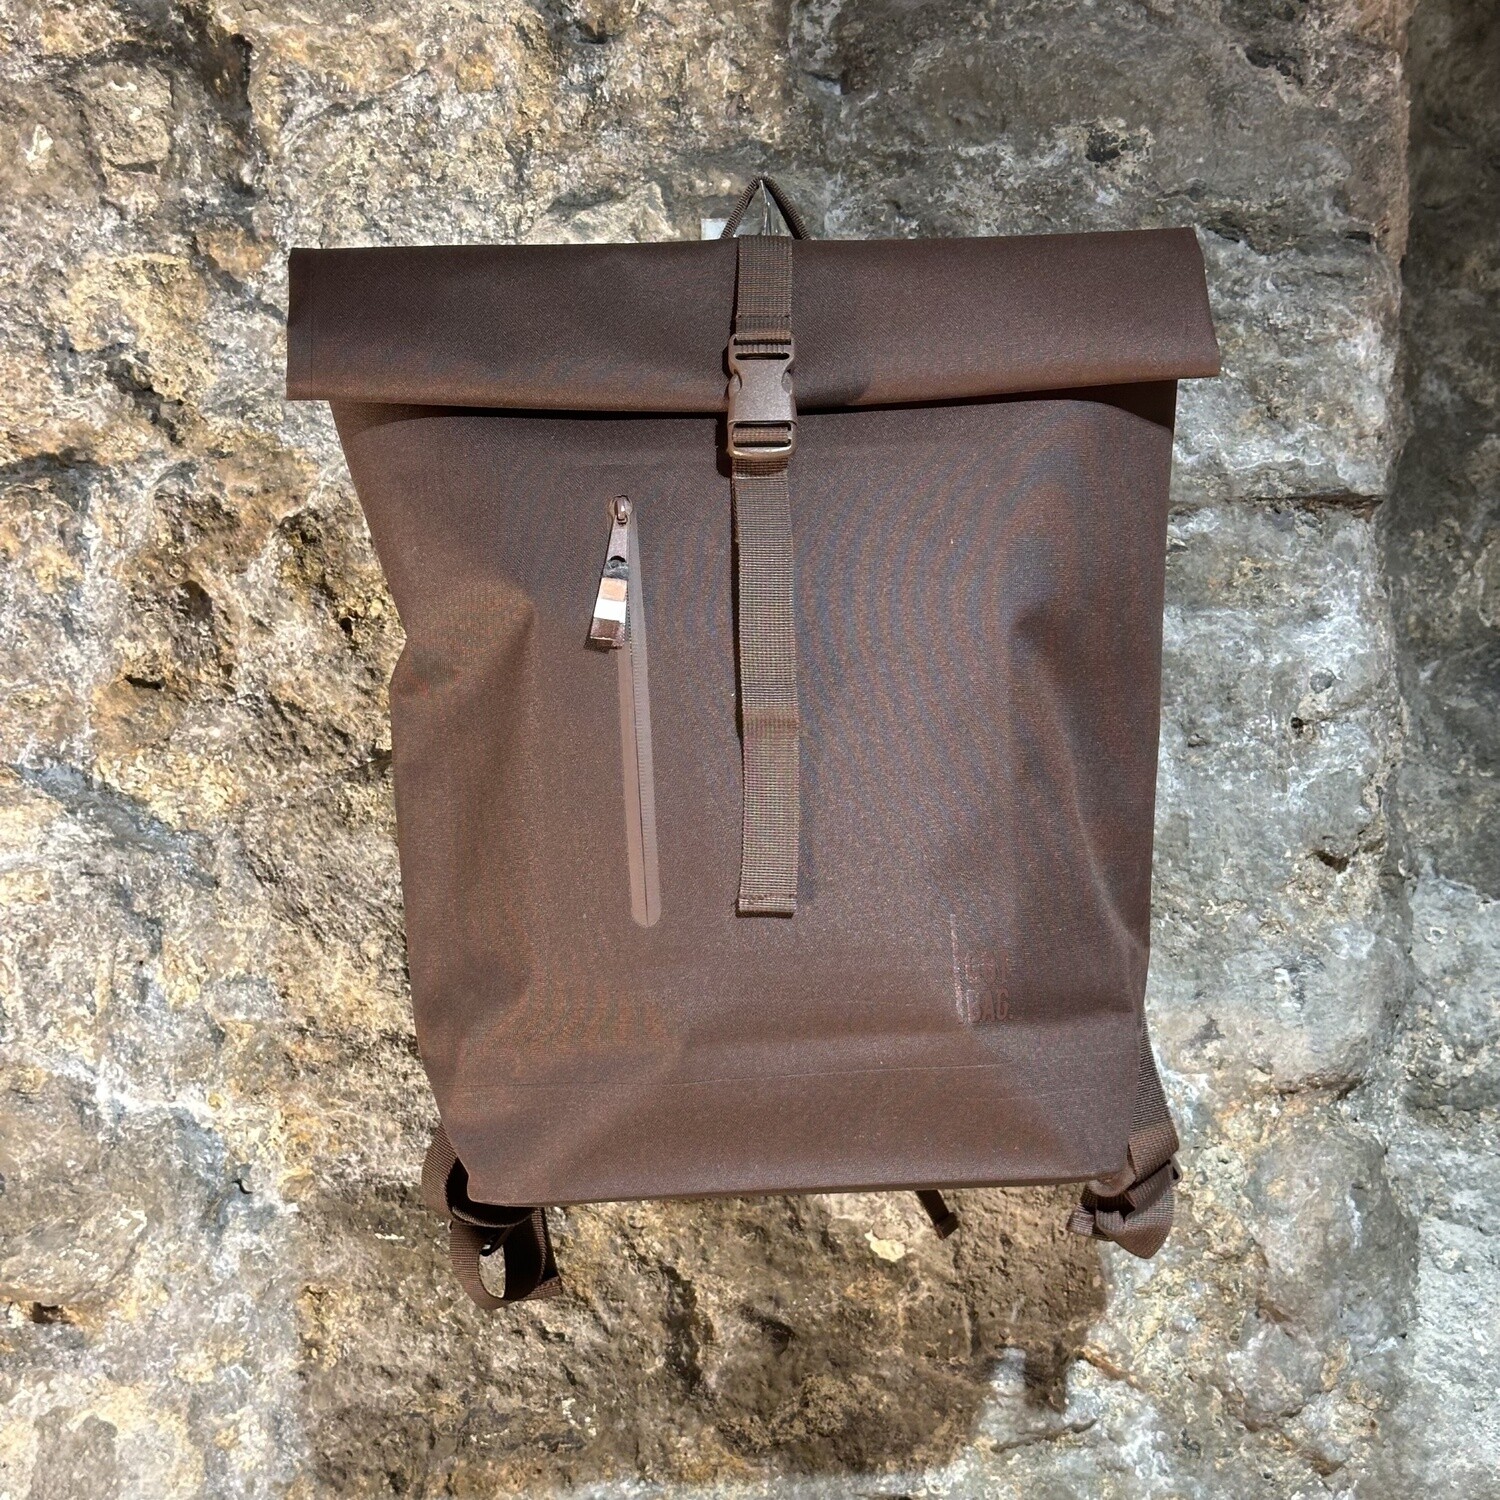 Got Bag — Rolltop Lite trench monochrome